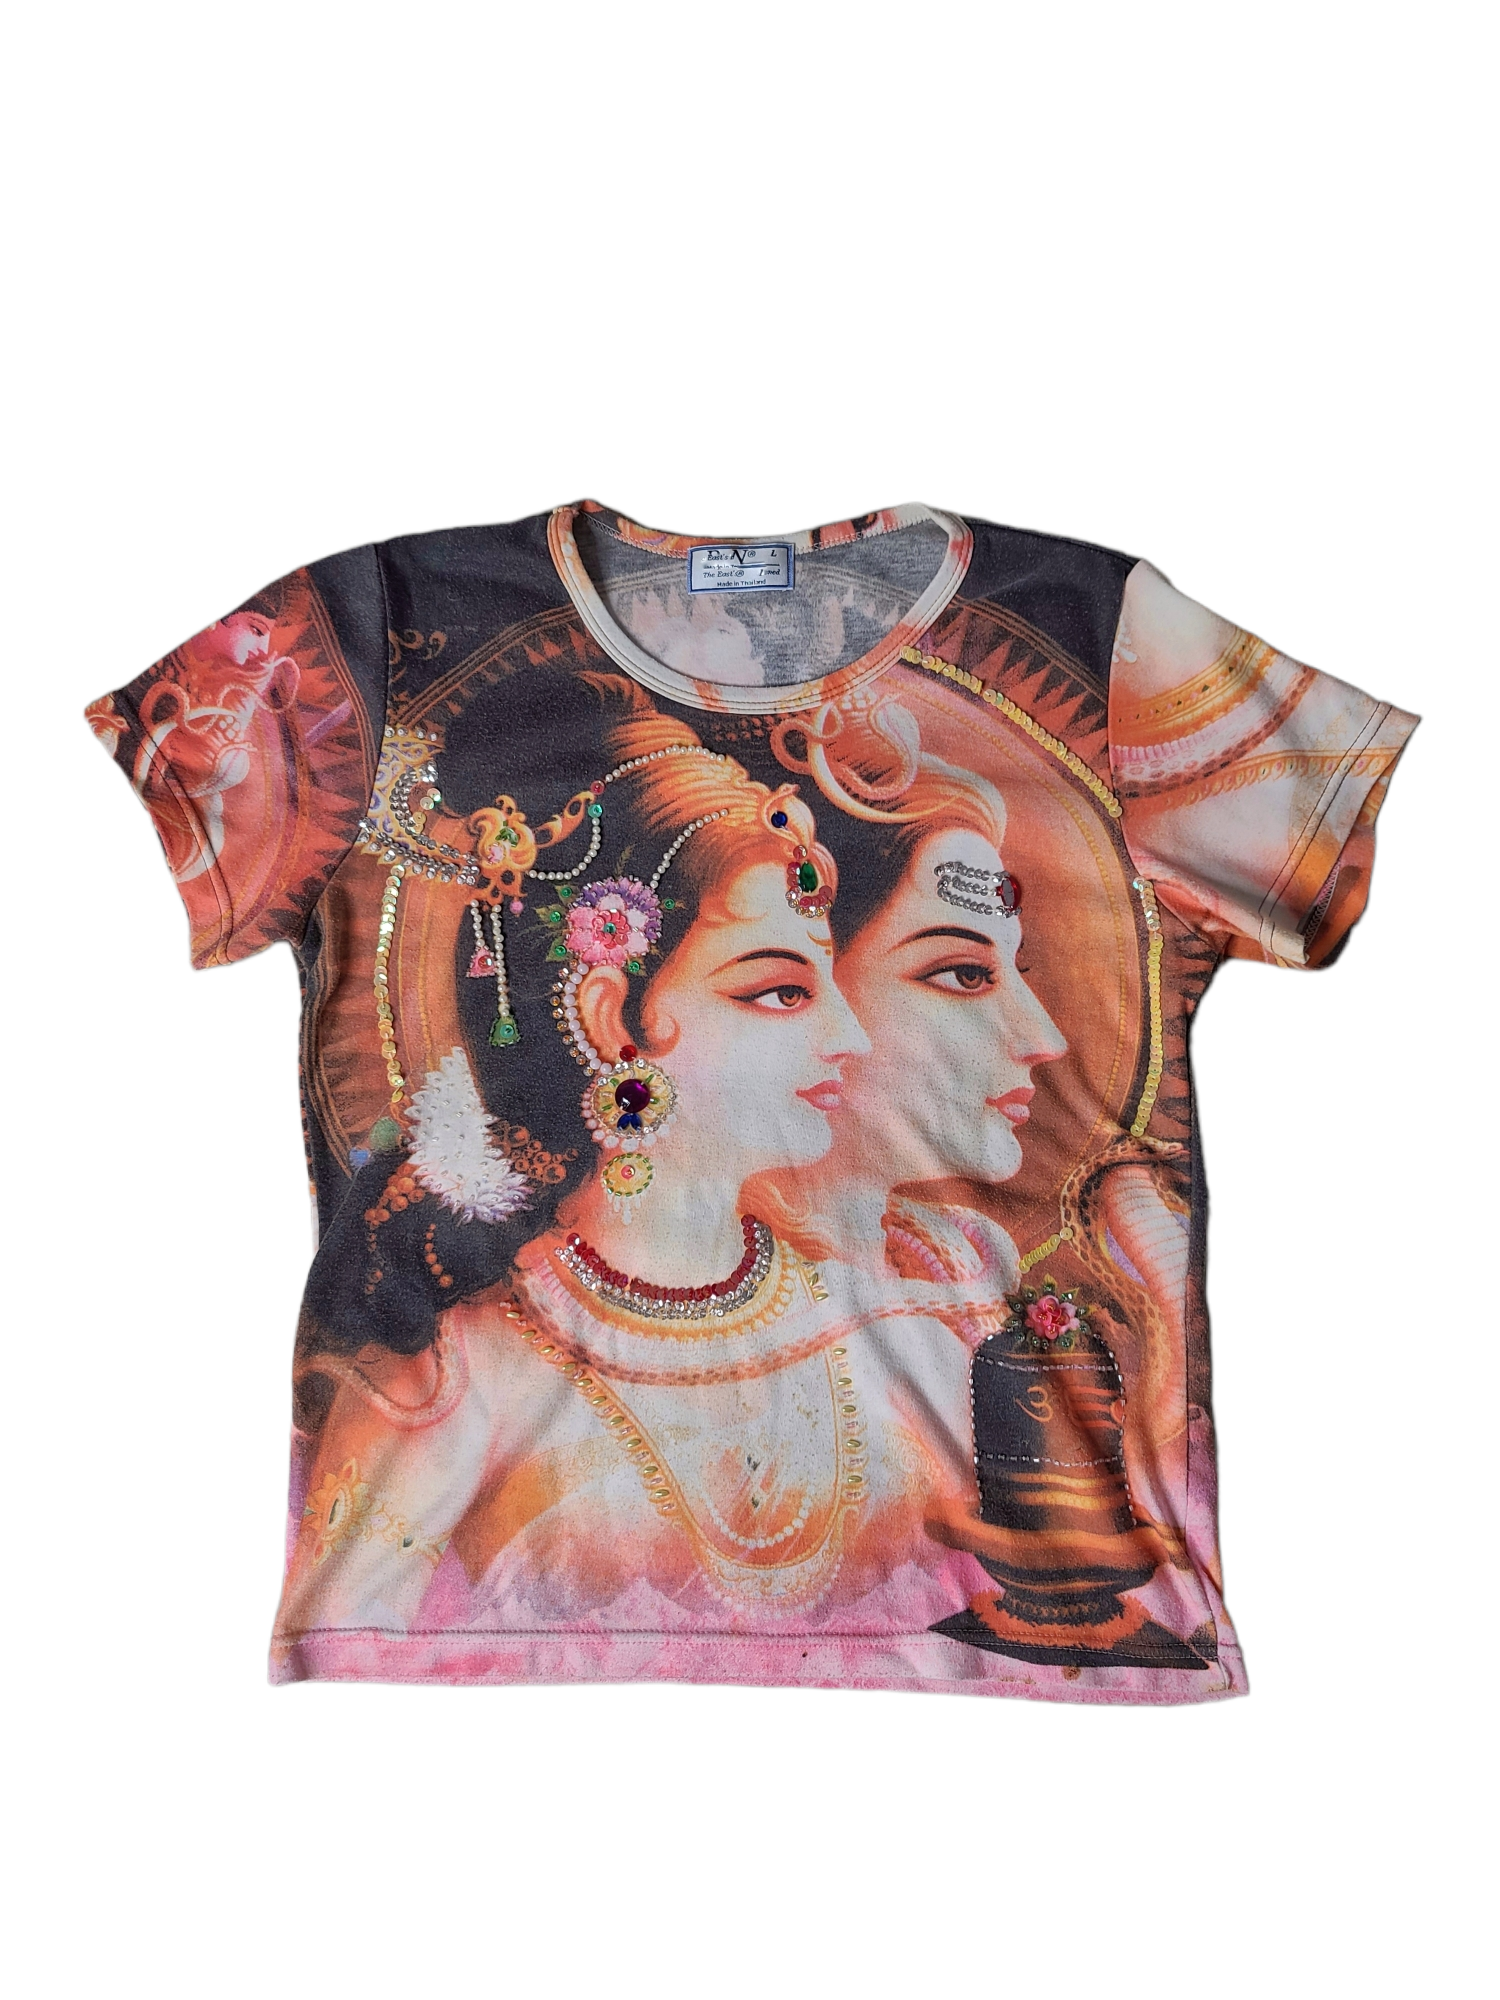 Tshirt vintage archive fashion cybery2k top printed funky indien bijoux relief y2k 2000 rare